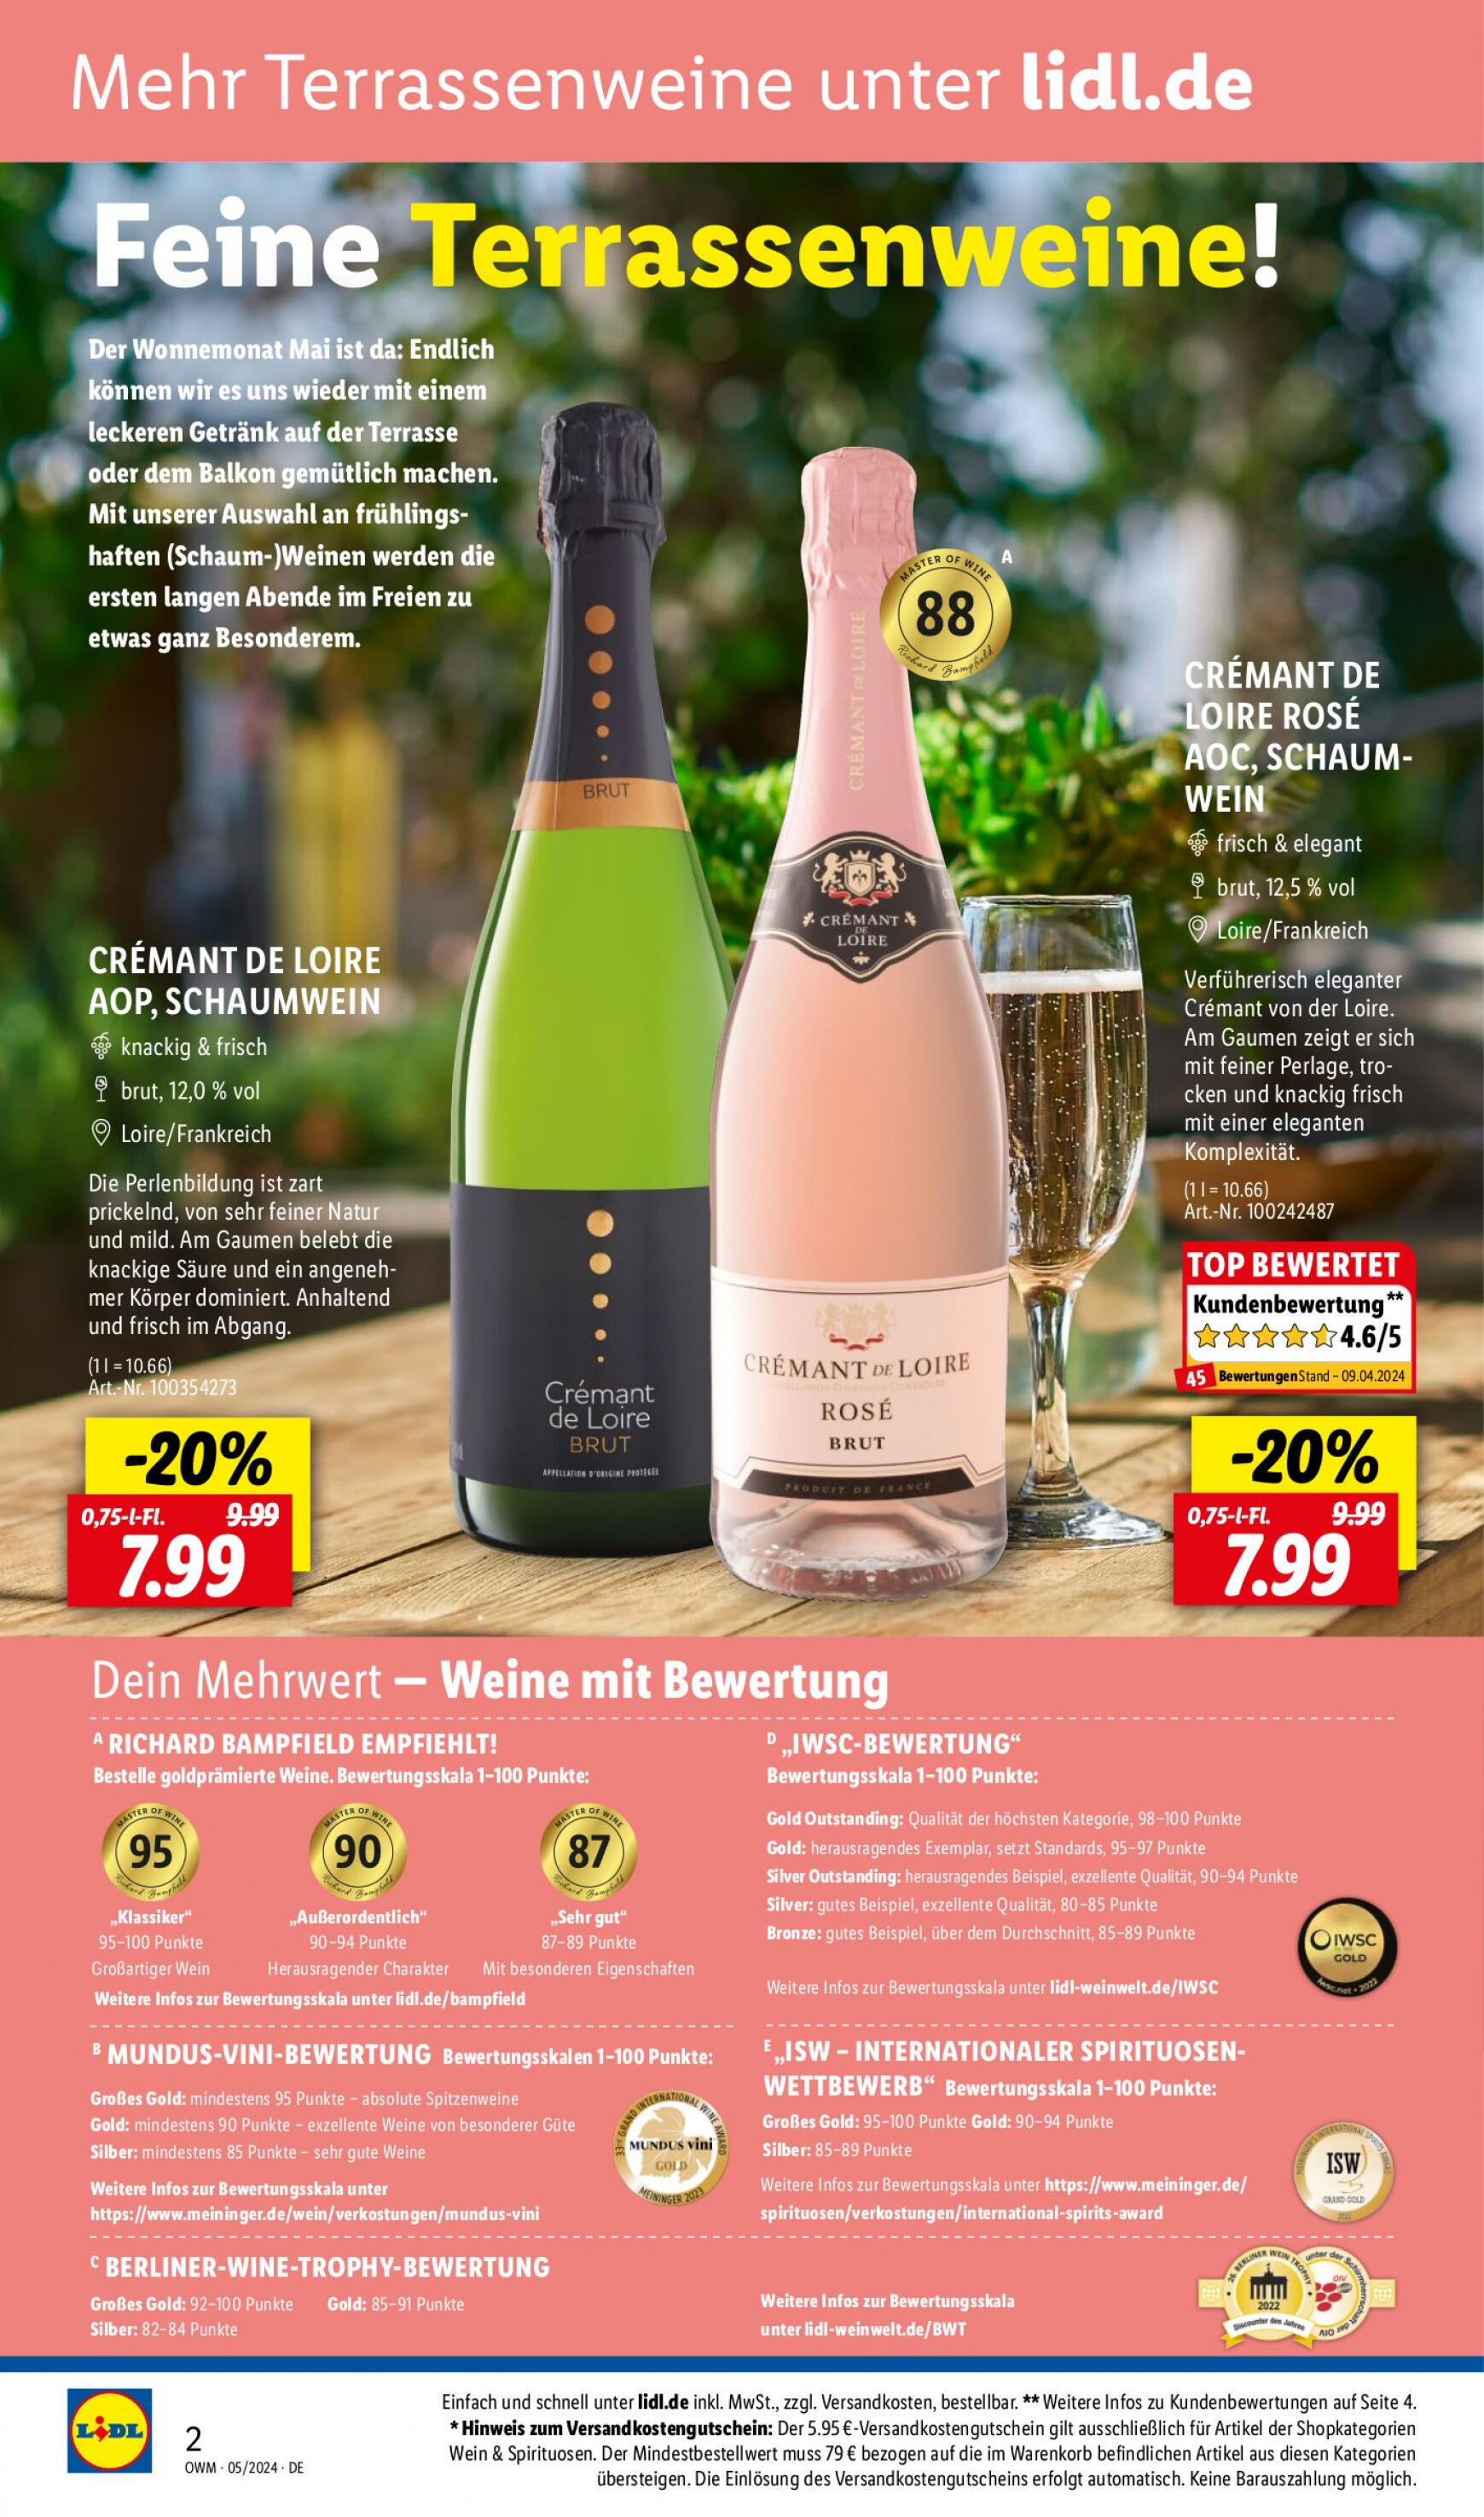 lidl - Flyer Lidl - Highlights in der Weinwelt aktuell 01.05. - 31.05. - page: 2